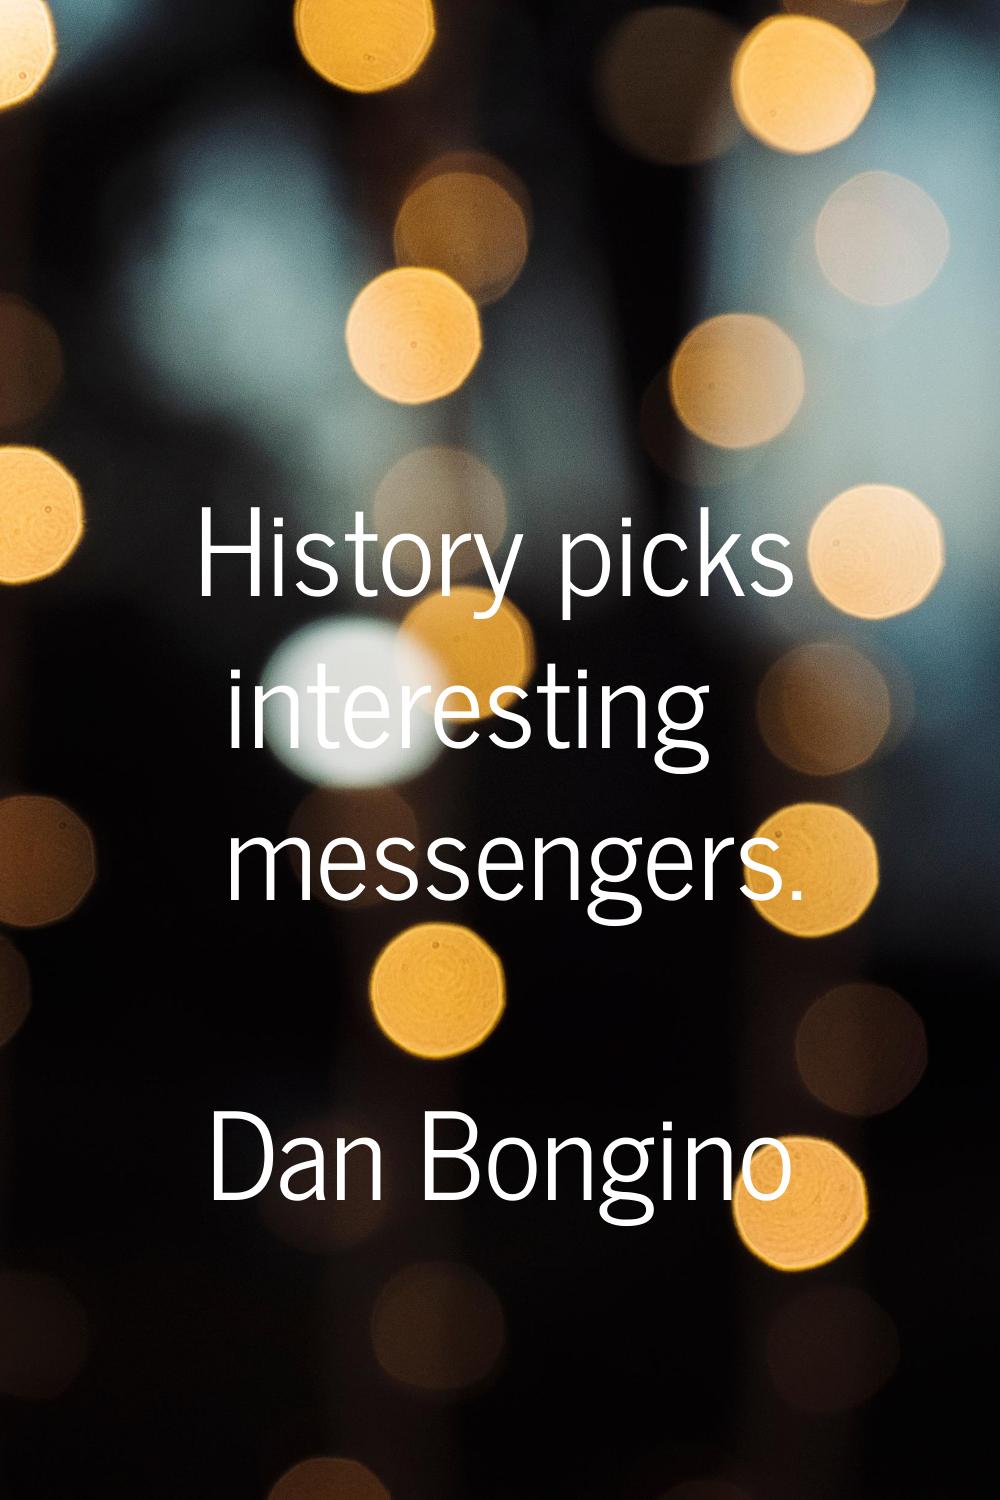 History picks interesting messengers.